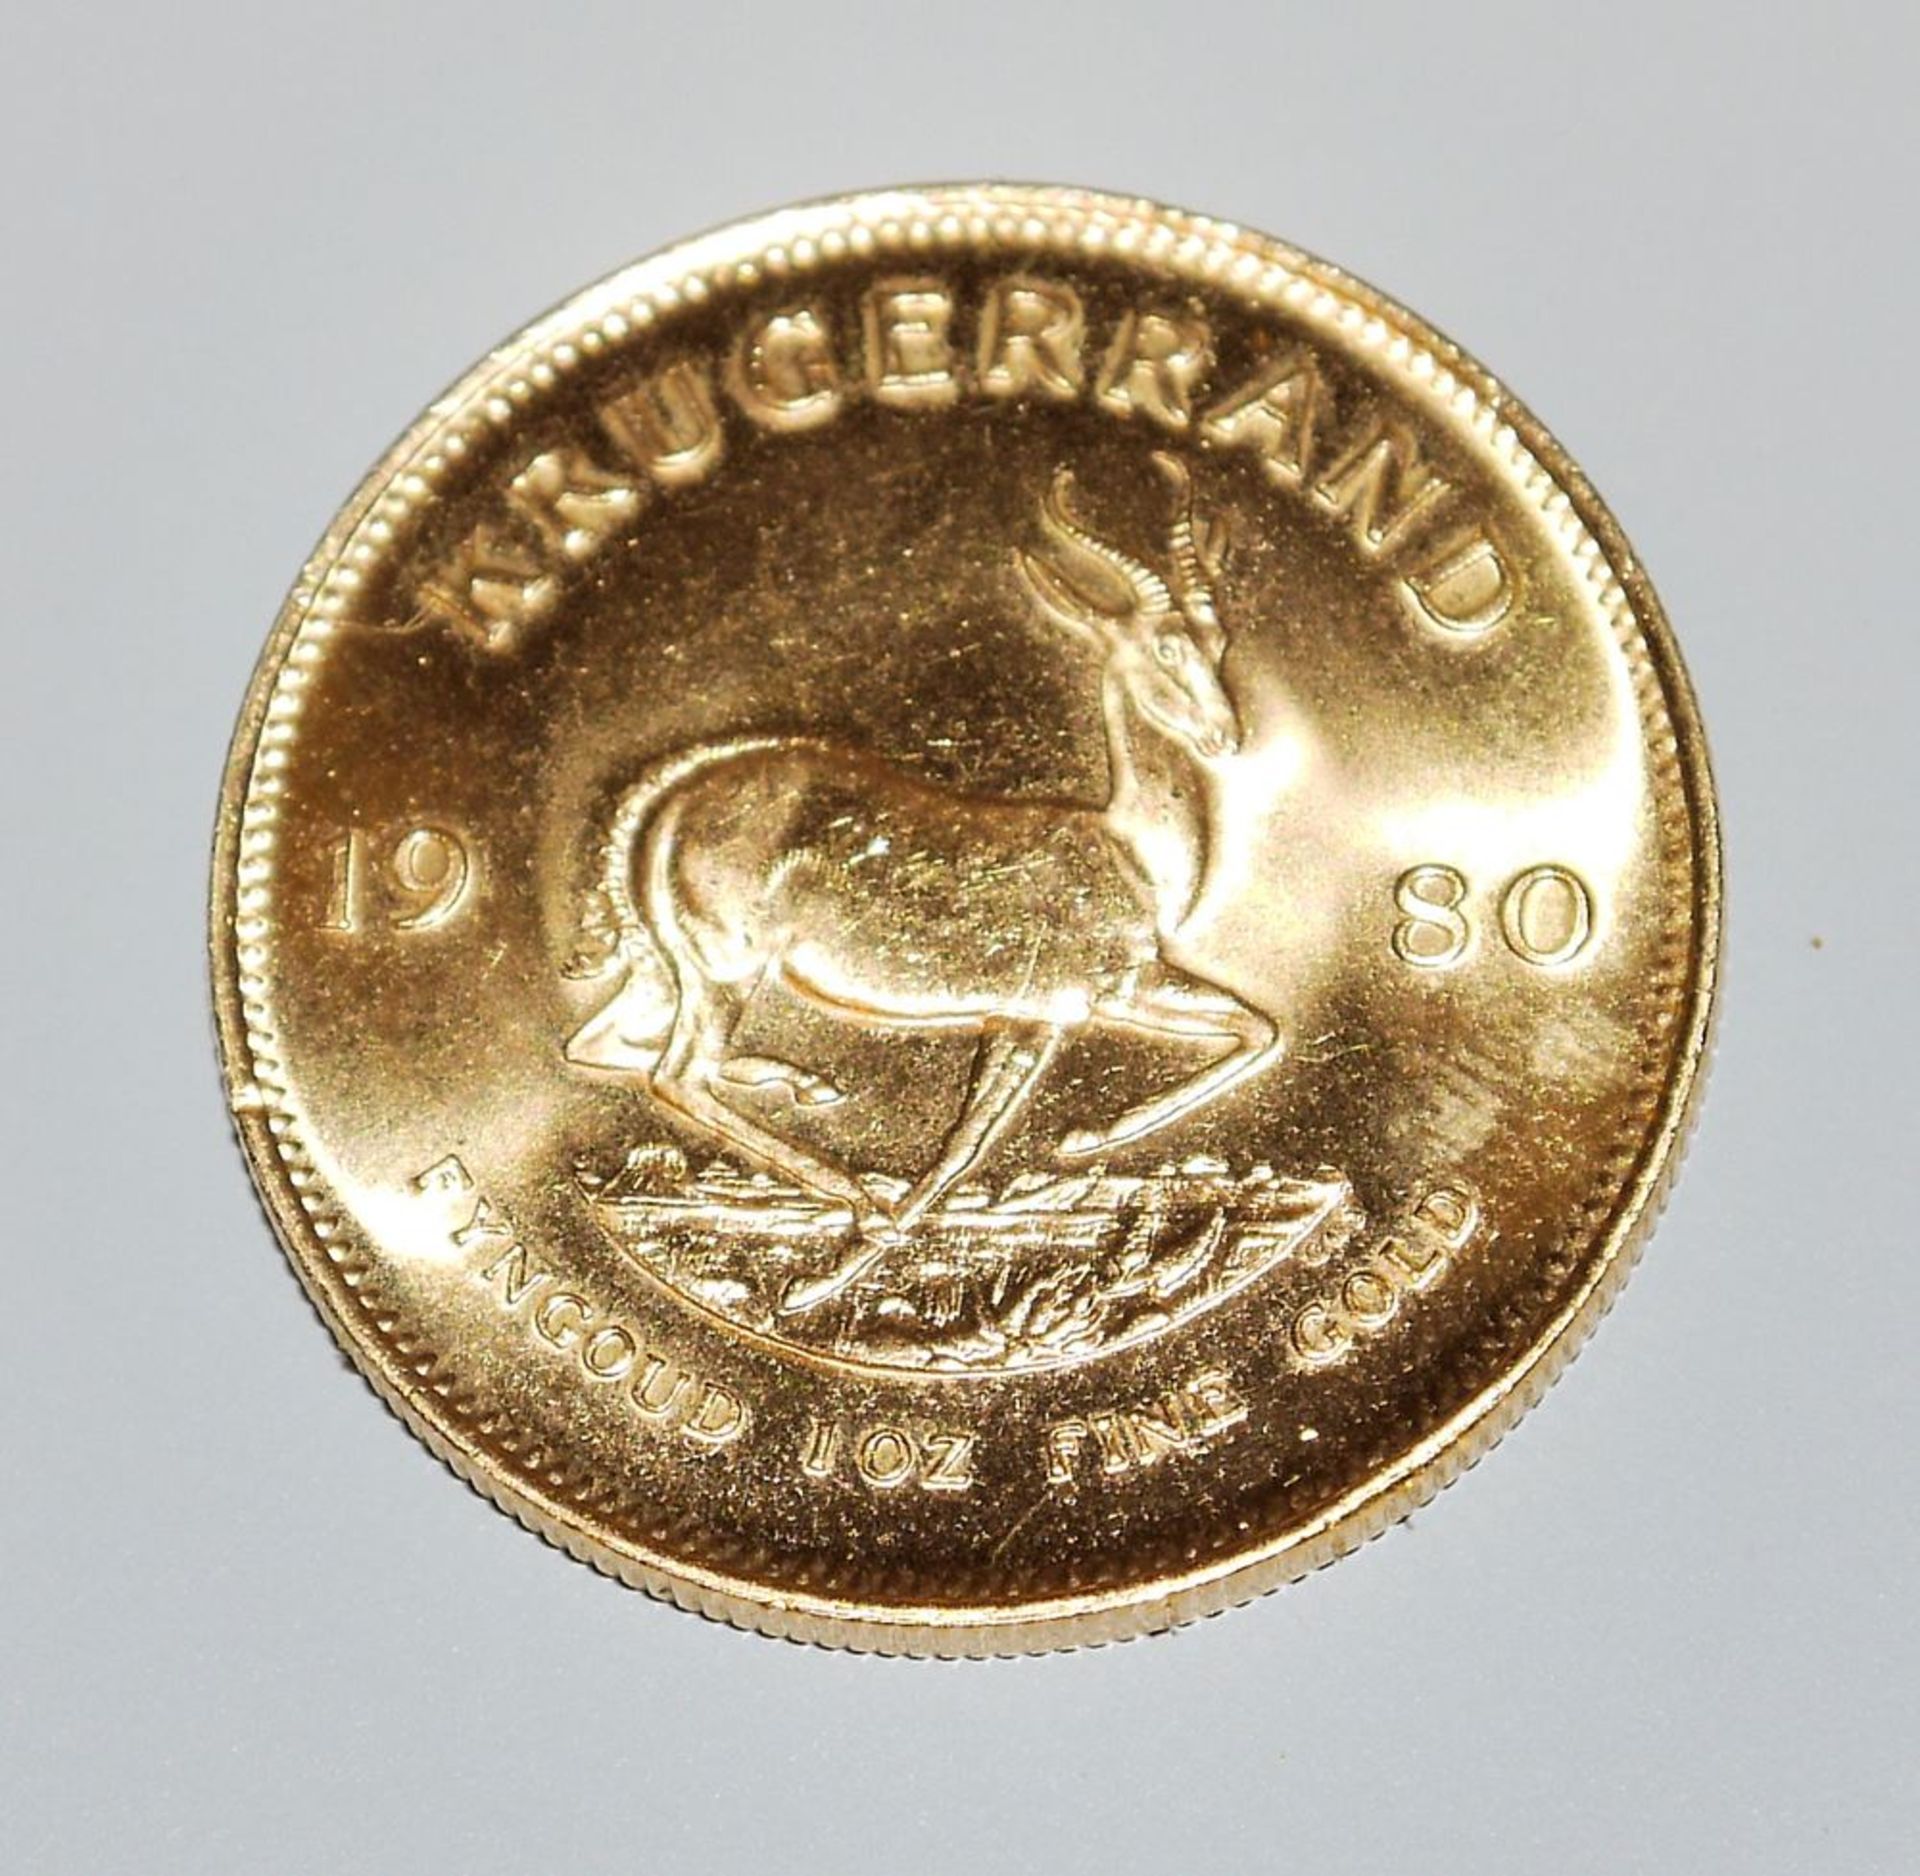 Gold münze Krugerrand 1 oz, Südafrica 1980 - Image 2 of 2